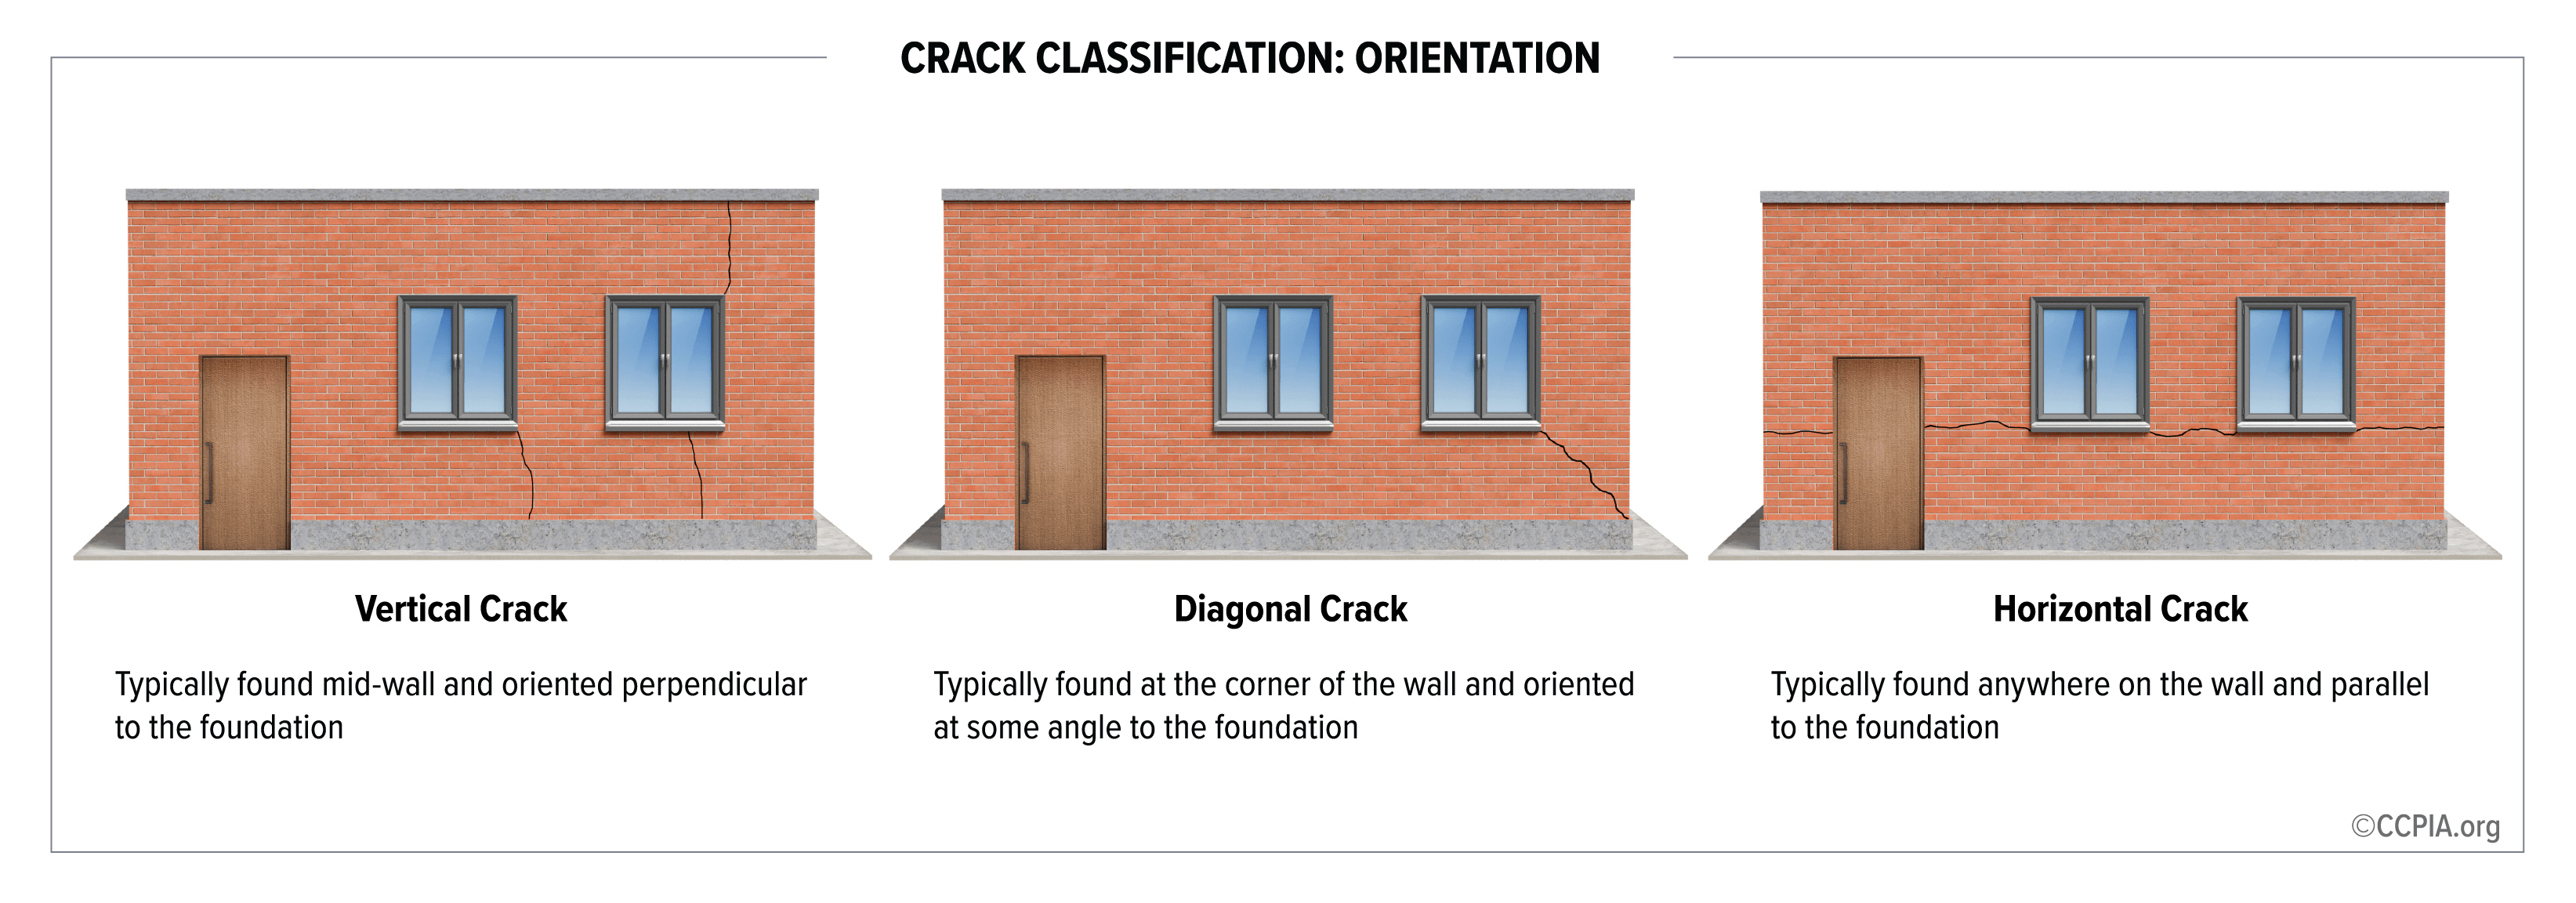 Crack Classification: Orientation